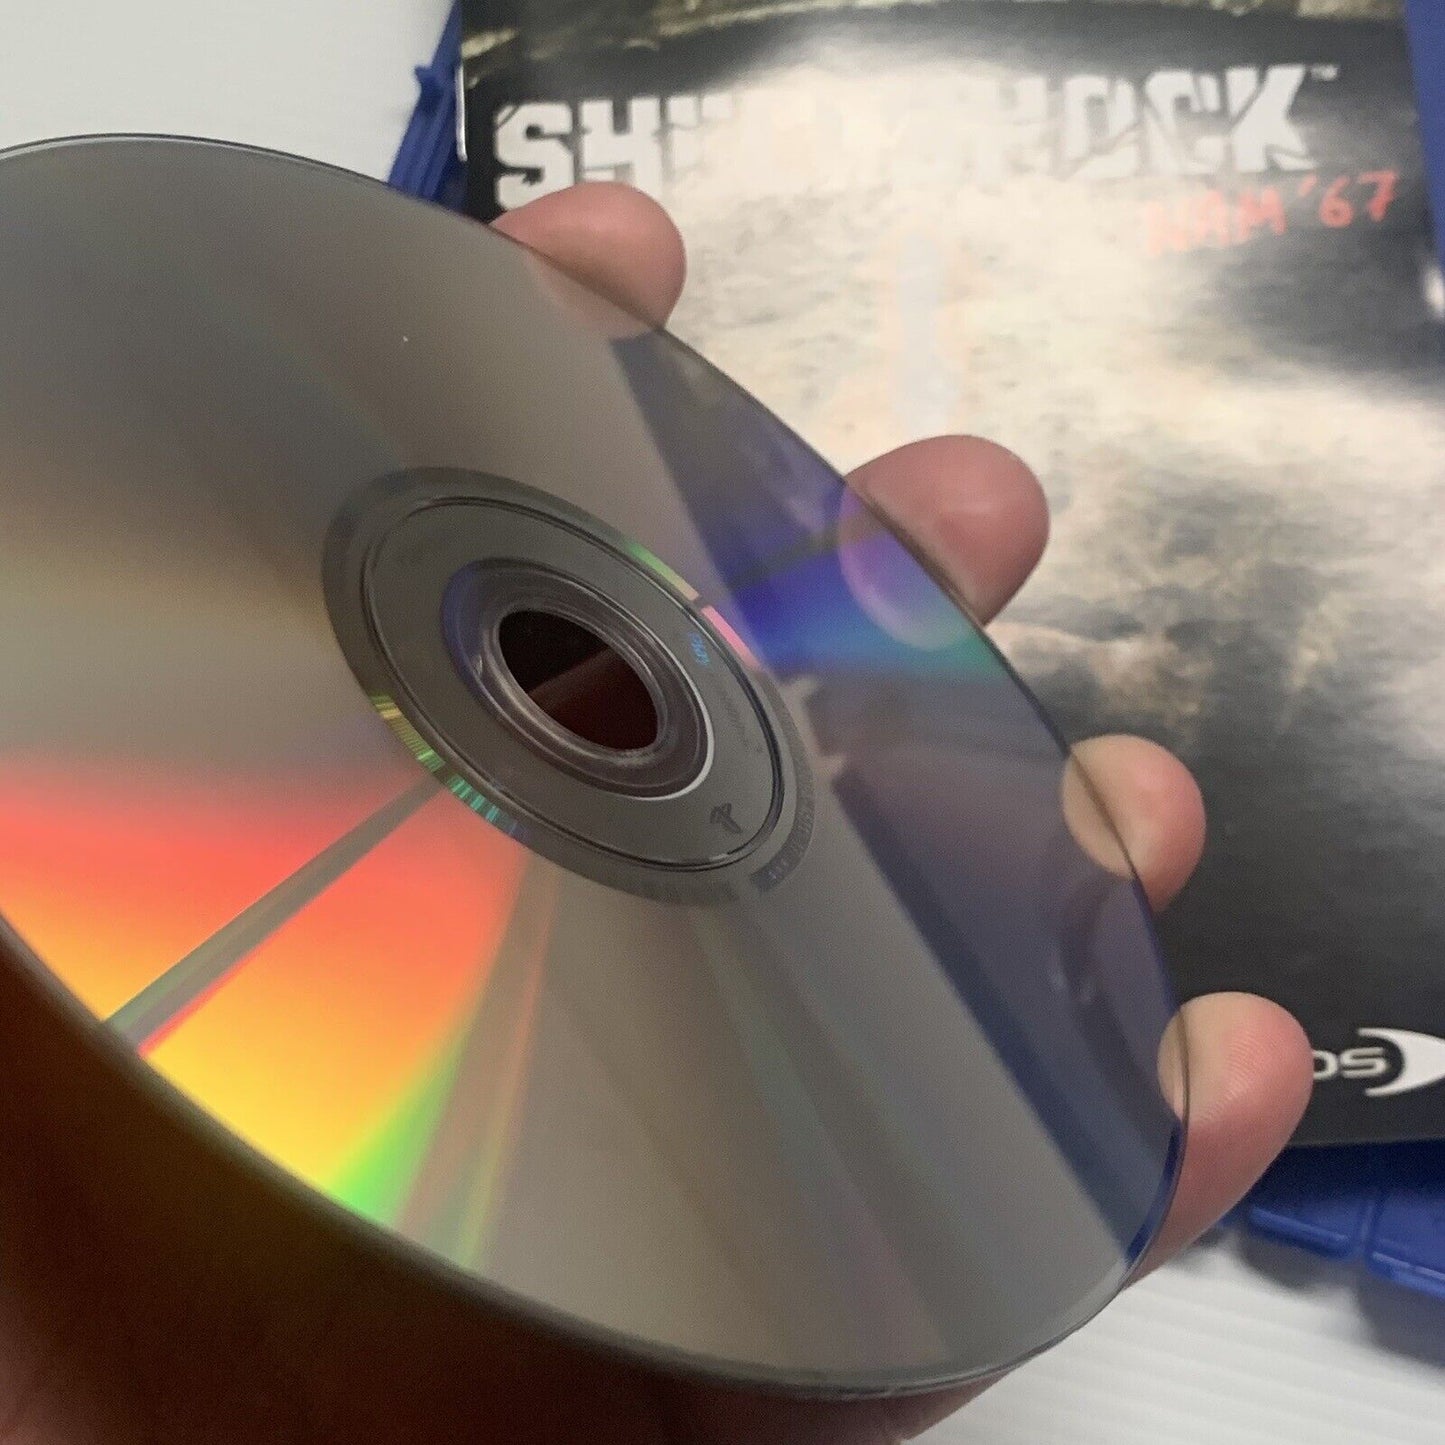 Shellshock Nam ‘67 PlayStation PS2 Game